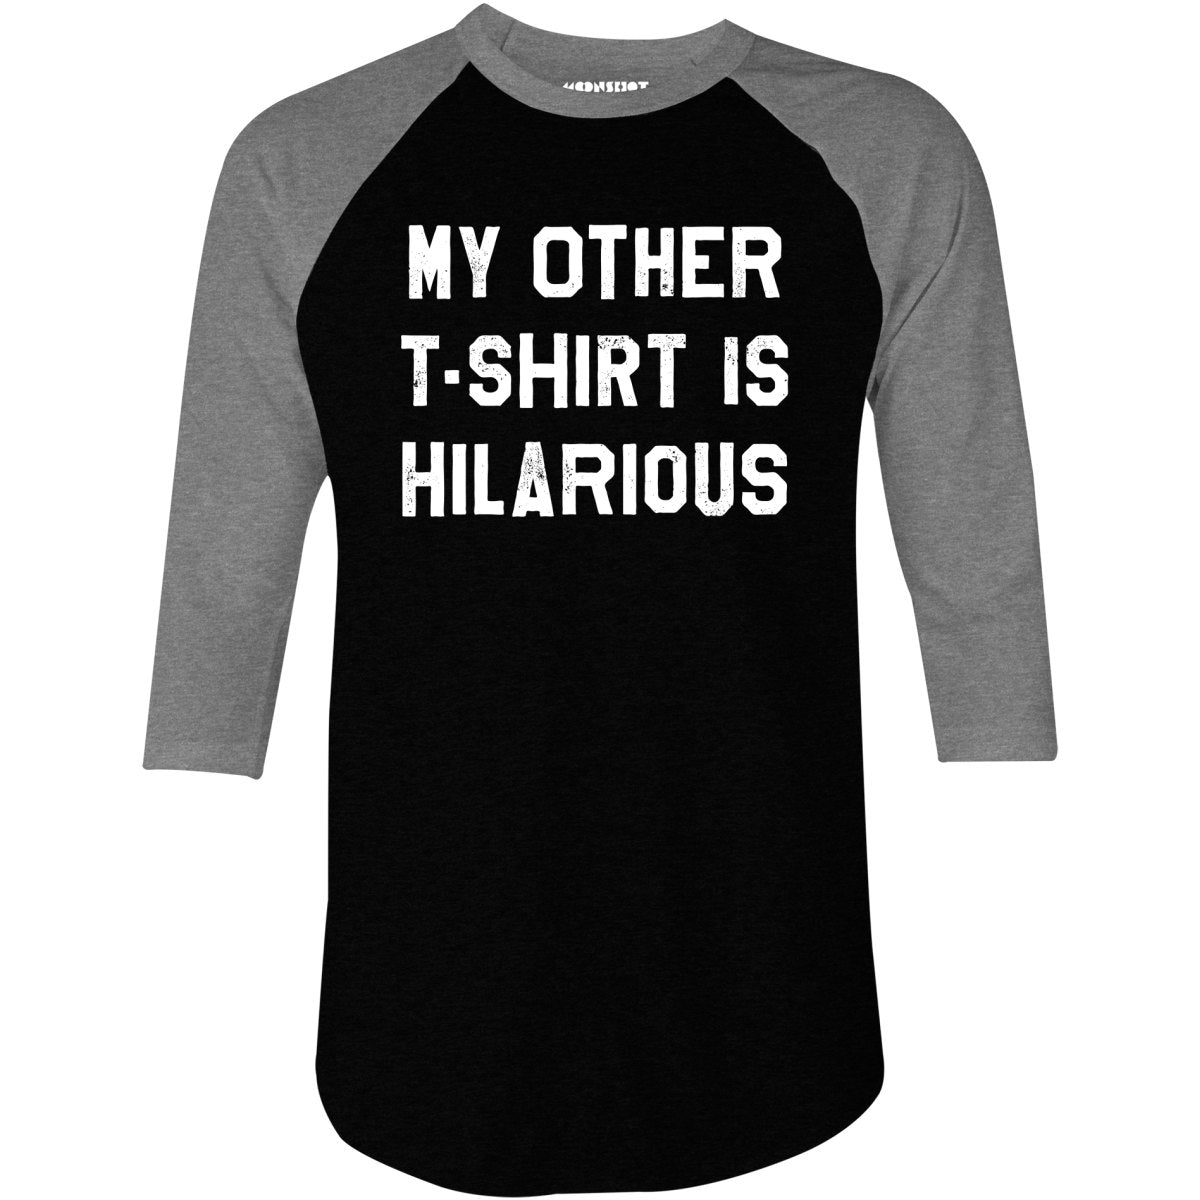 My Other T-Shirt is Hilarious - 3/4 Sleeve Raglan T-Shirt